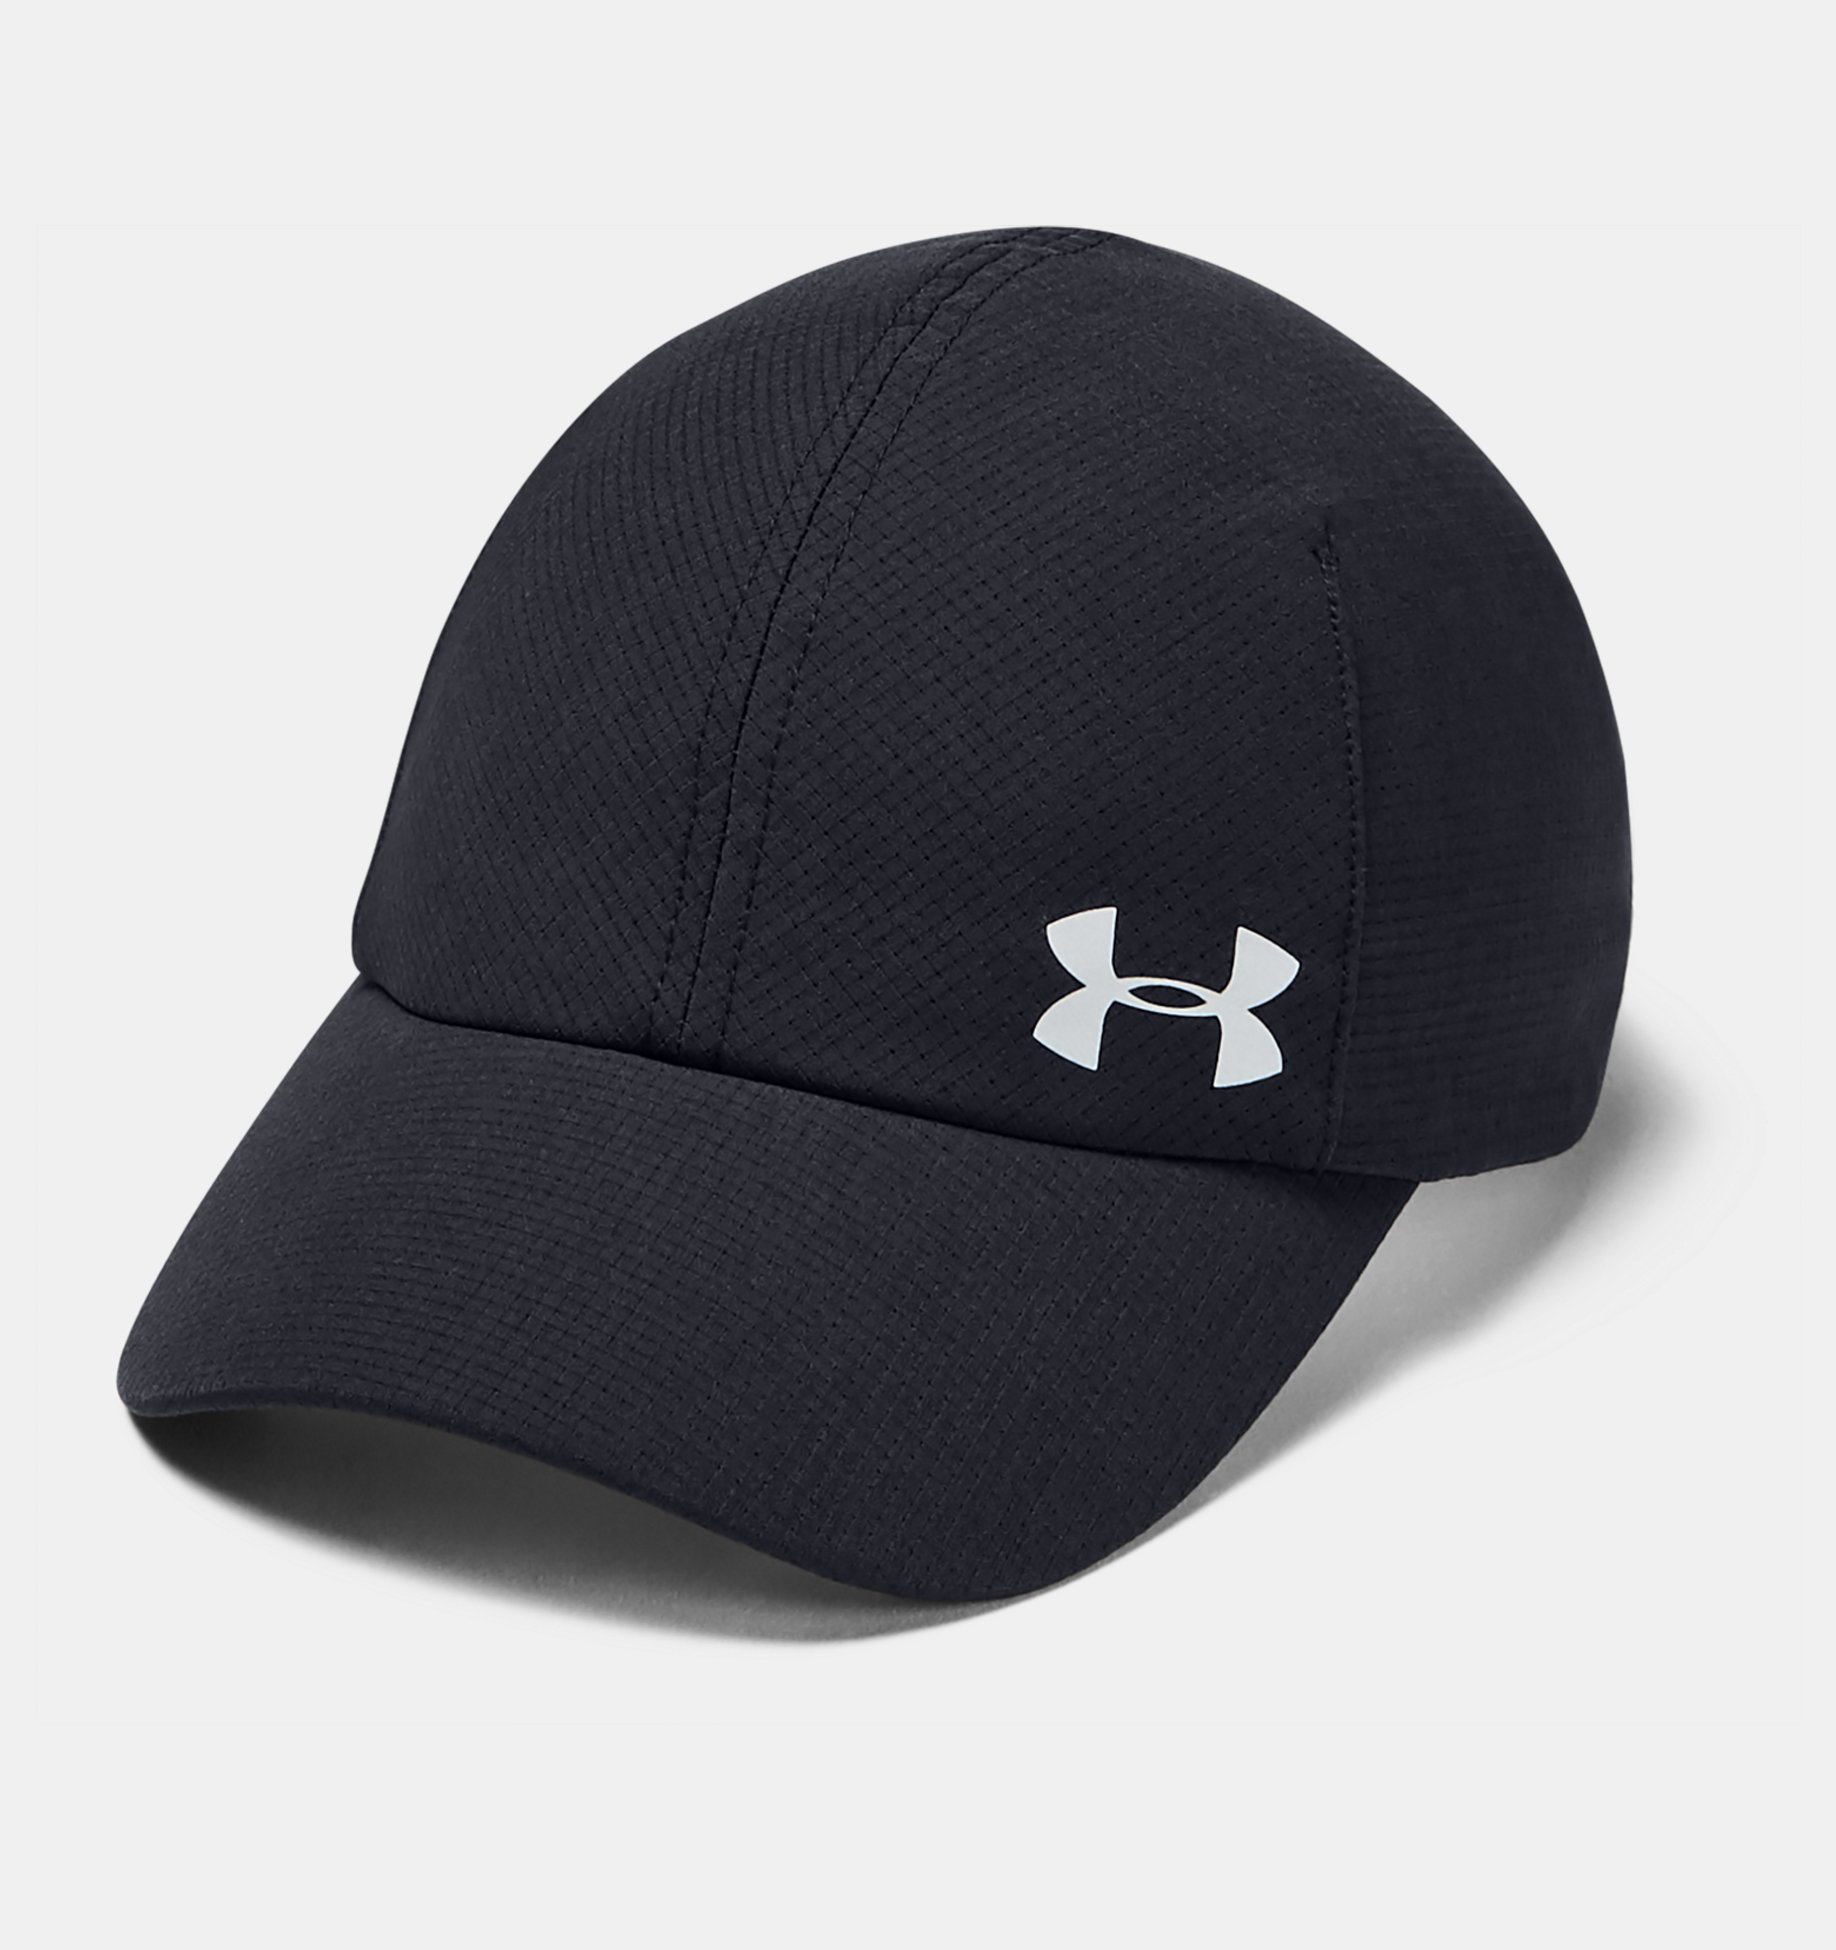 Under Armour Women's Training Running Yoga Adjustable Cap Hat Black for sale online 